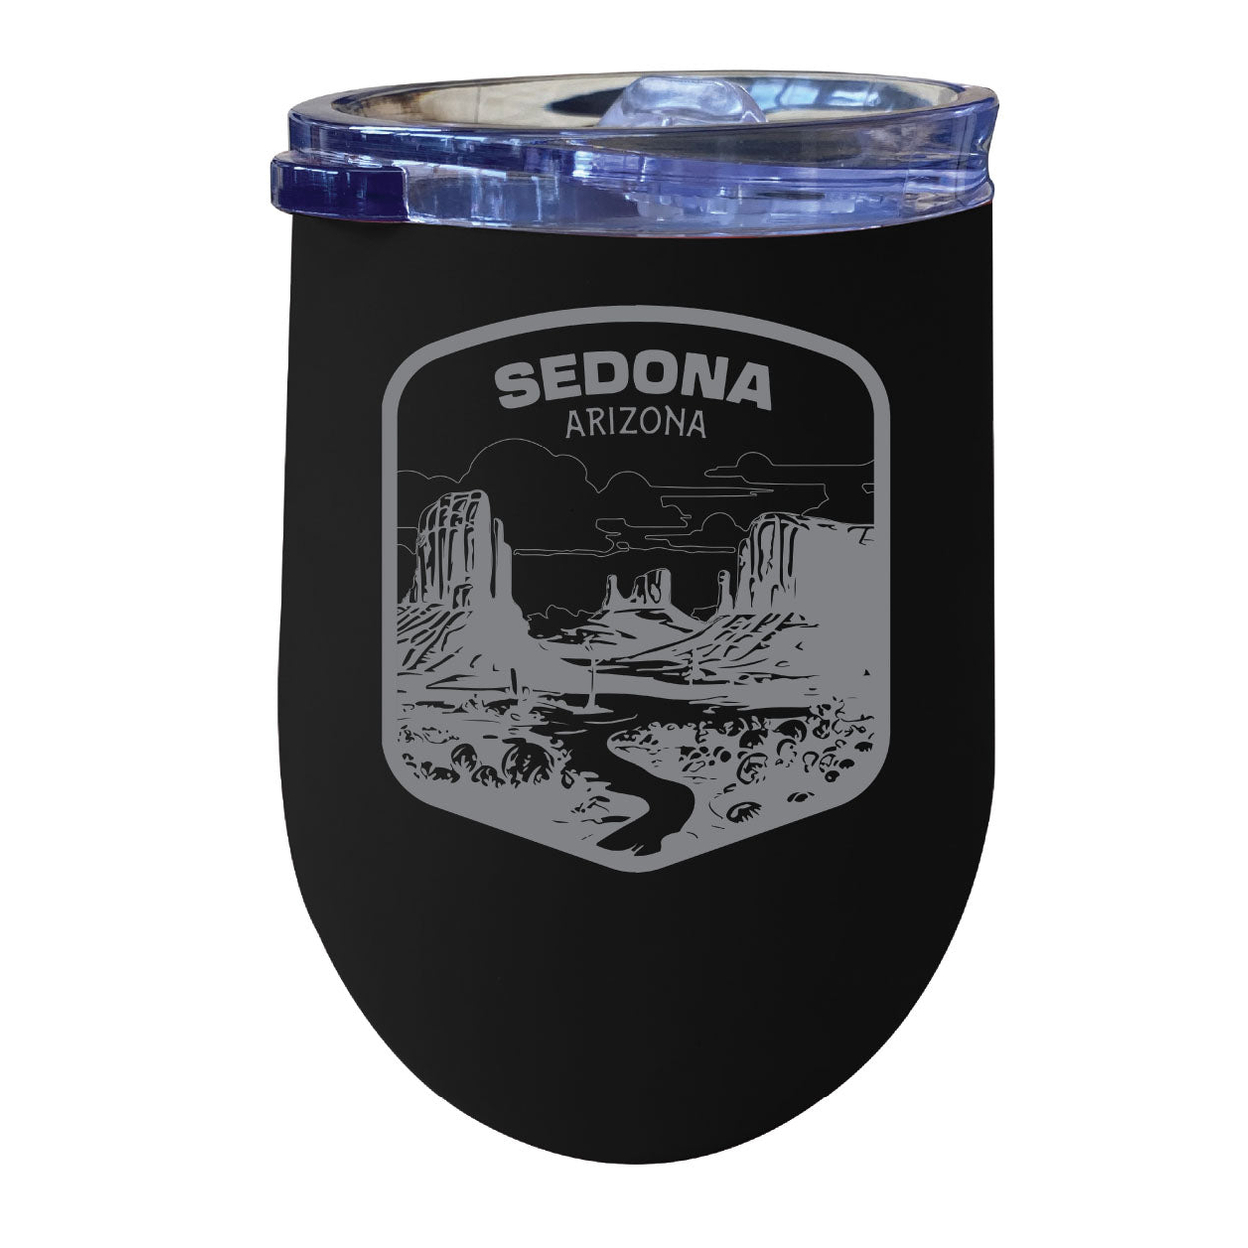 Sedona Arizona Souvenir 12 Oz Engraved Insulated Wine Stainless Steel Tumbler - Black,,4-Pack